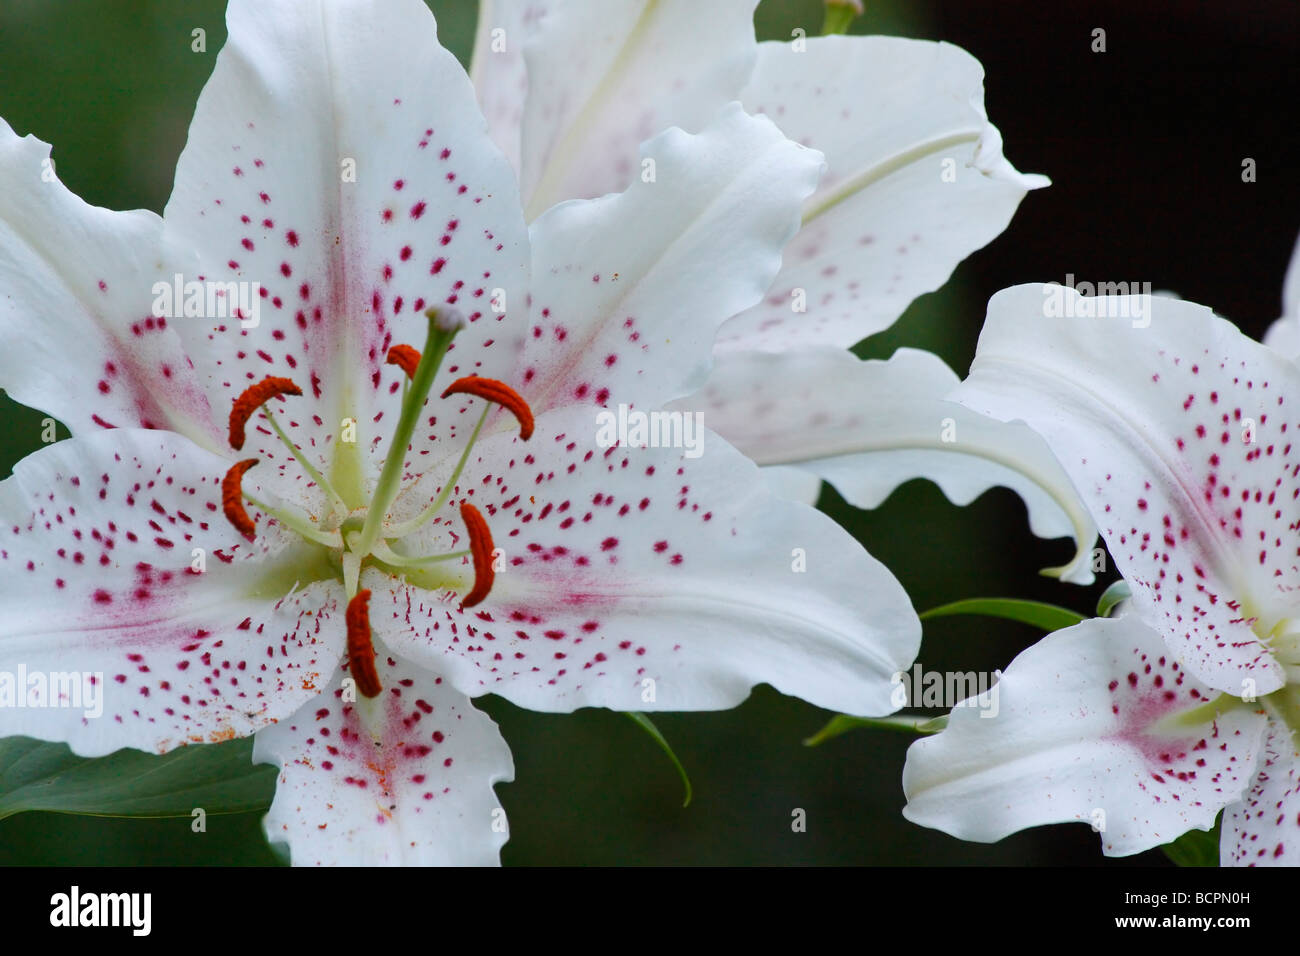 White LILIUM STAR GAZER flowers on natural background close up closeup detail macro display stamen pollen Stock Photo